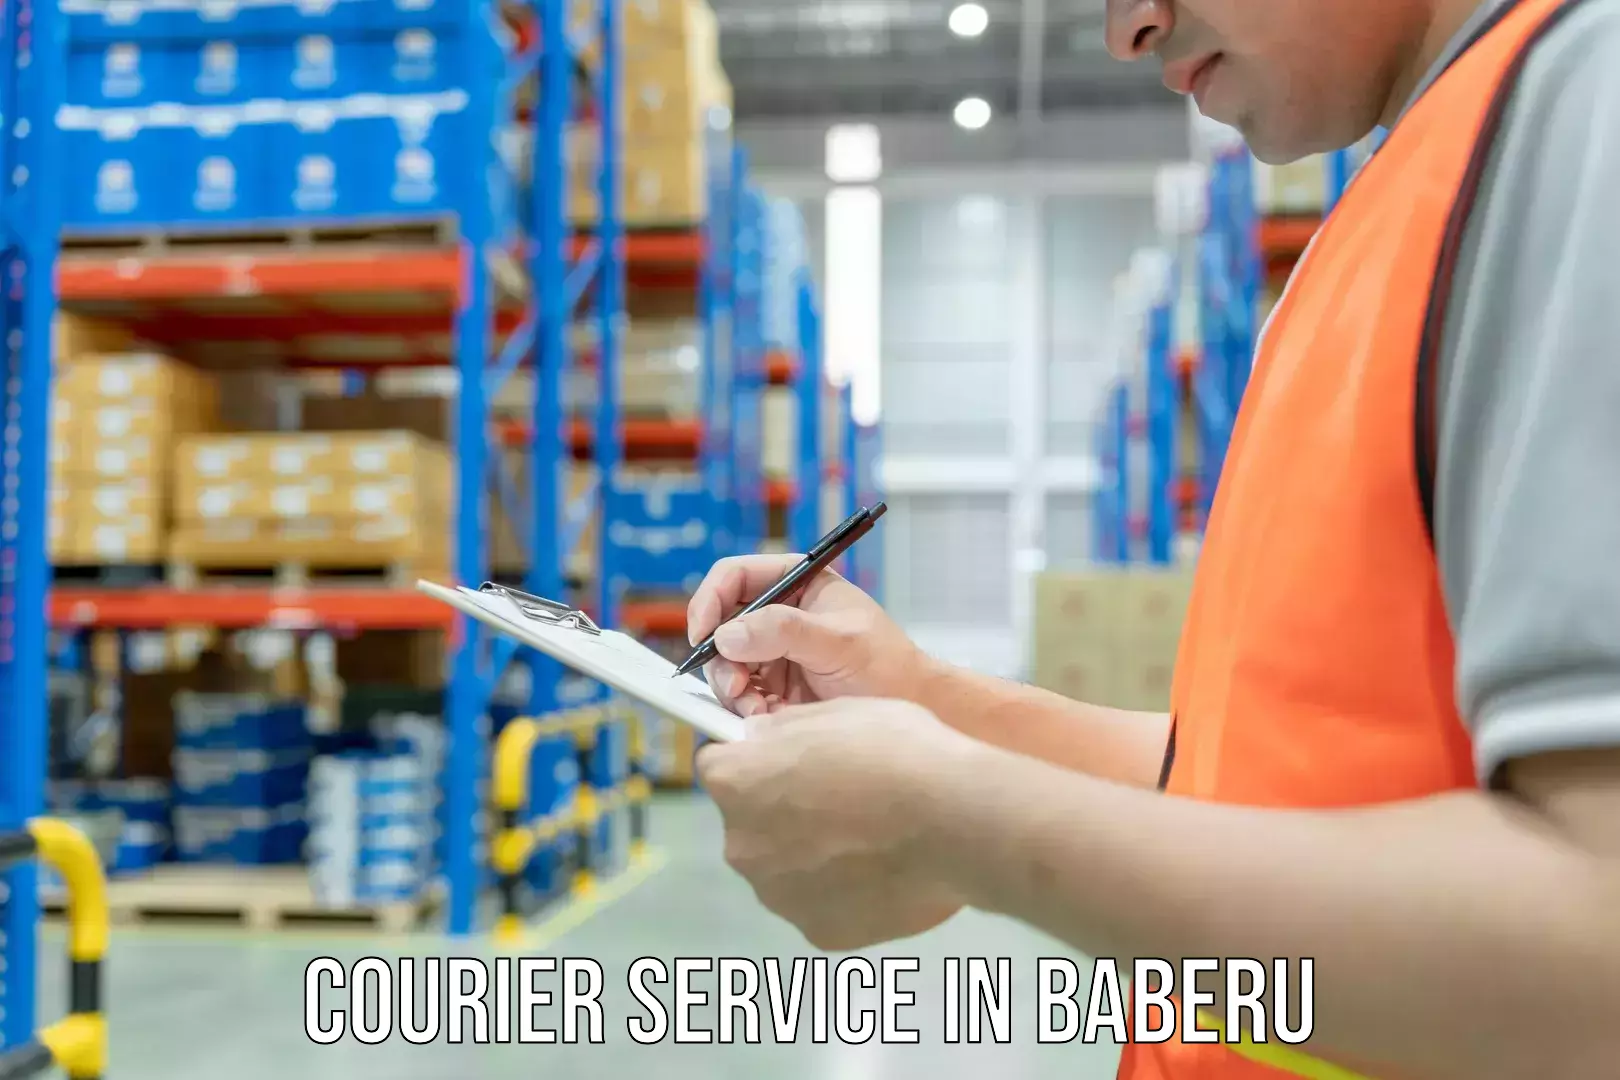 Customer-oriented courier services in Baberu